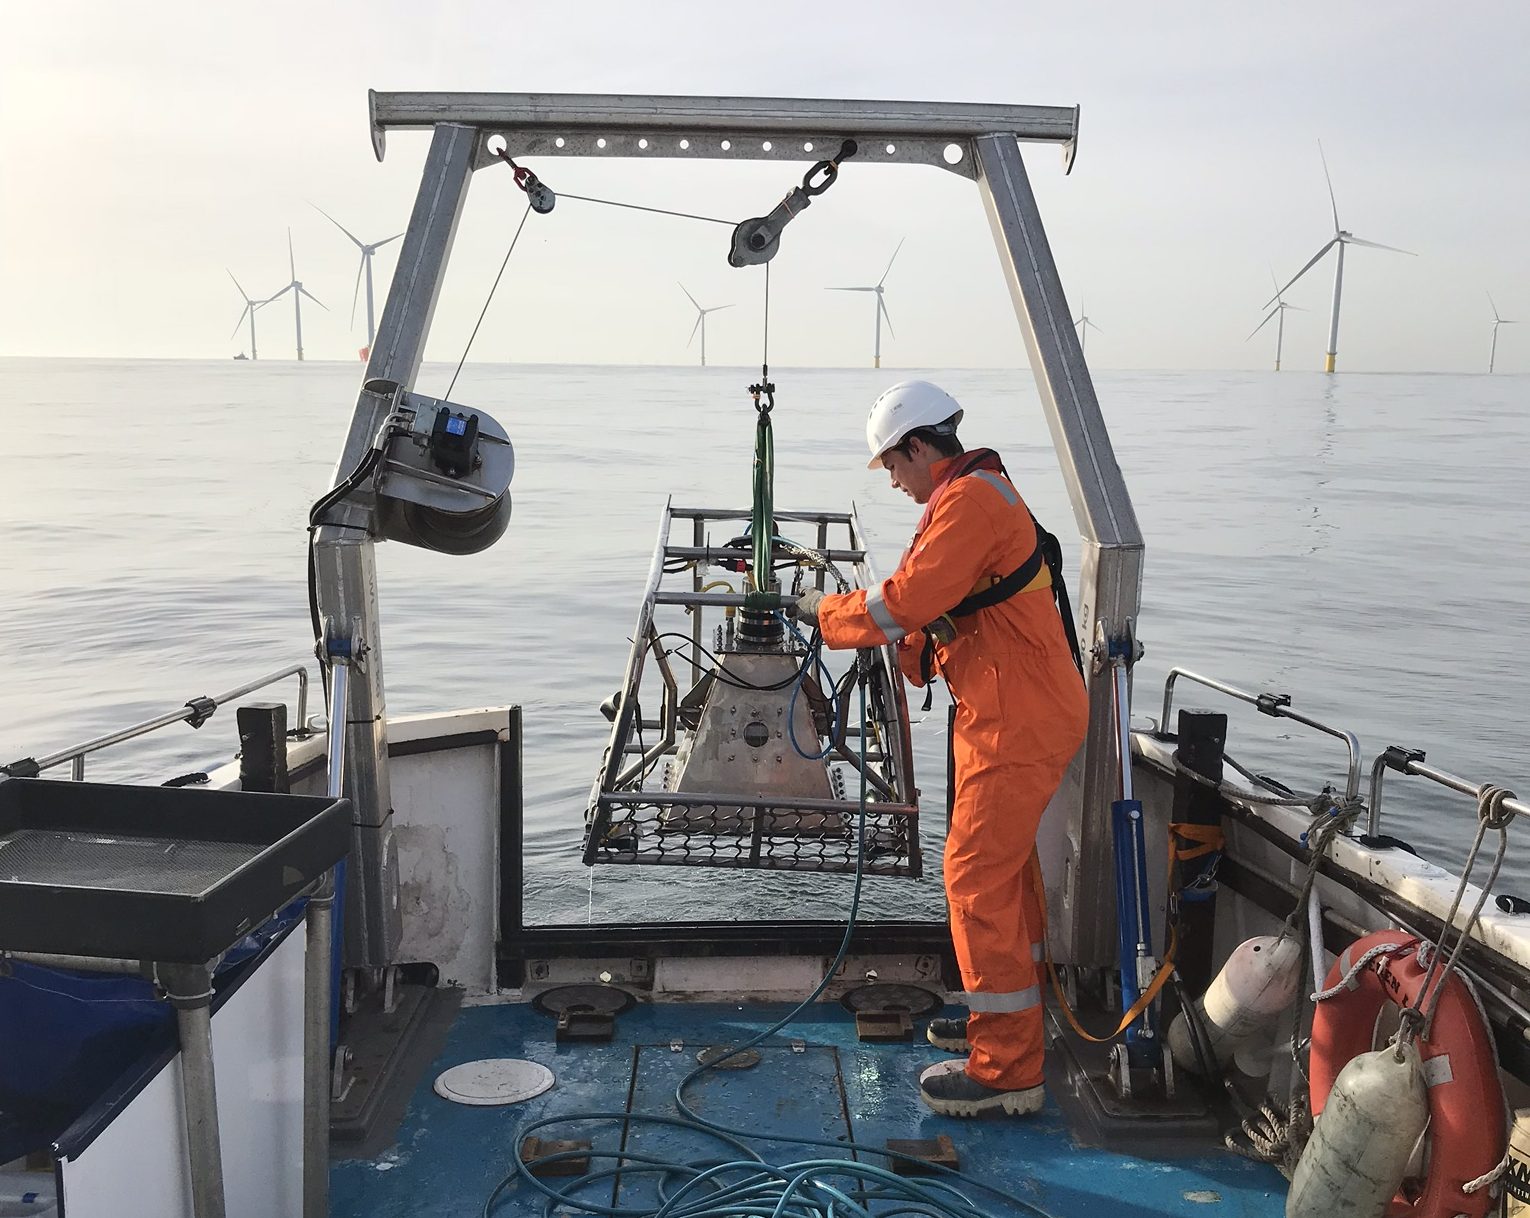 Ocean Ecology Ltd survey equipment being deployed